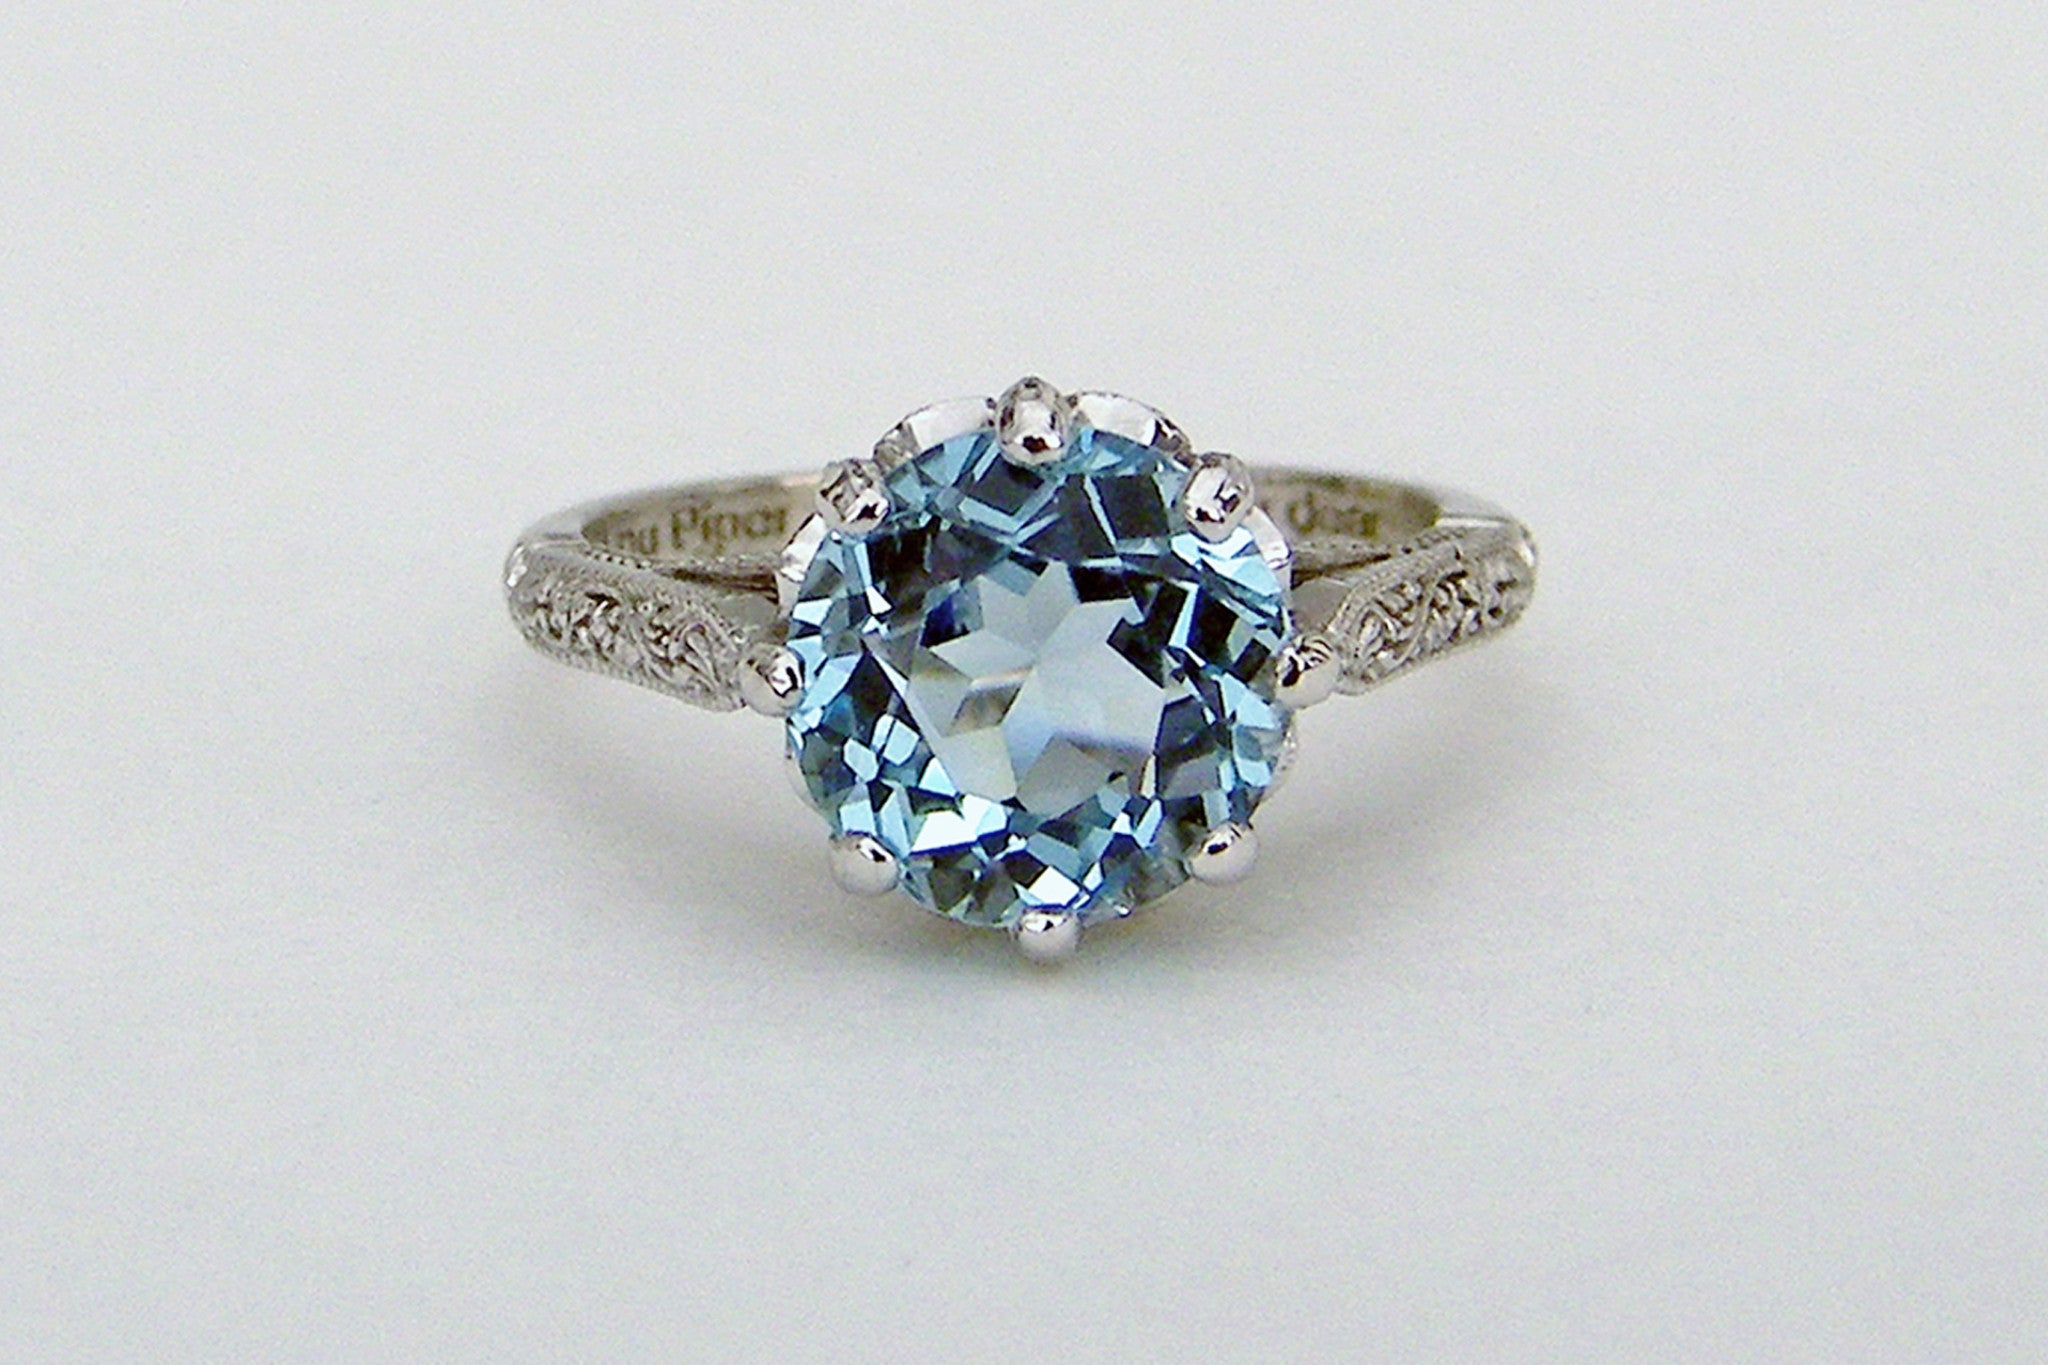 Blue topaz and diamond wedding rings